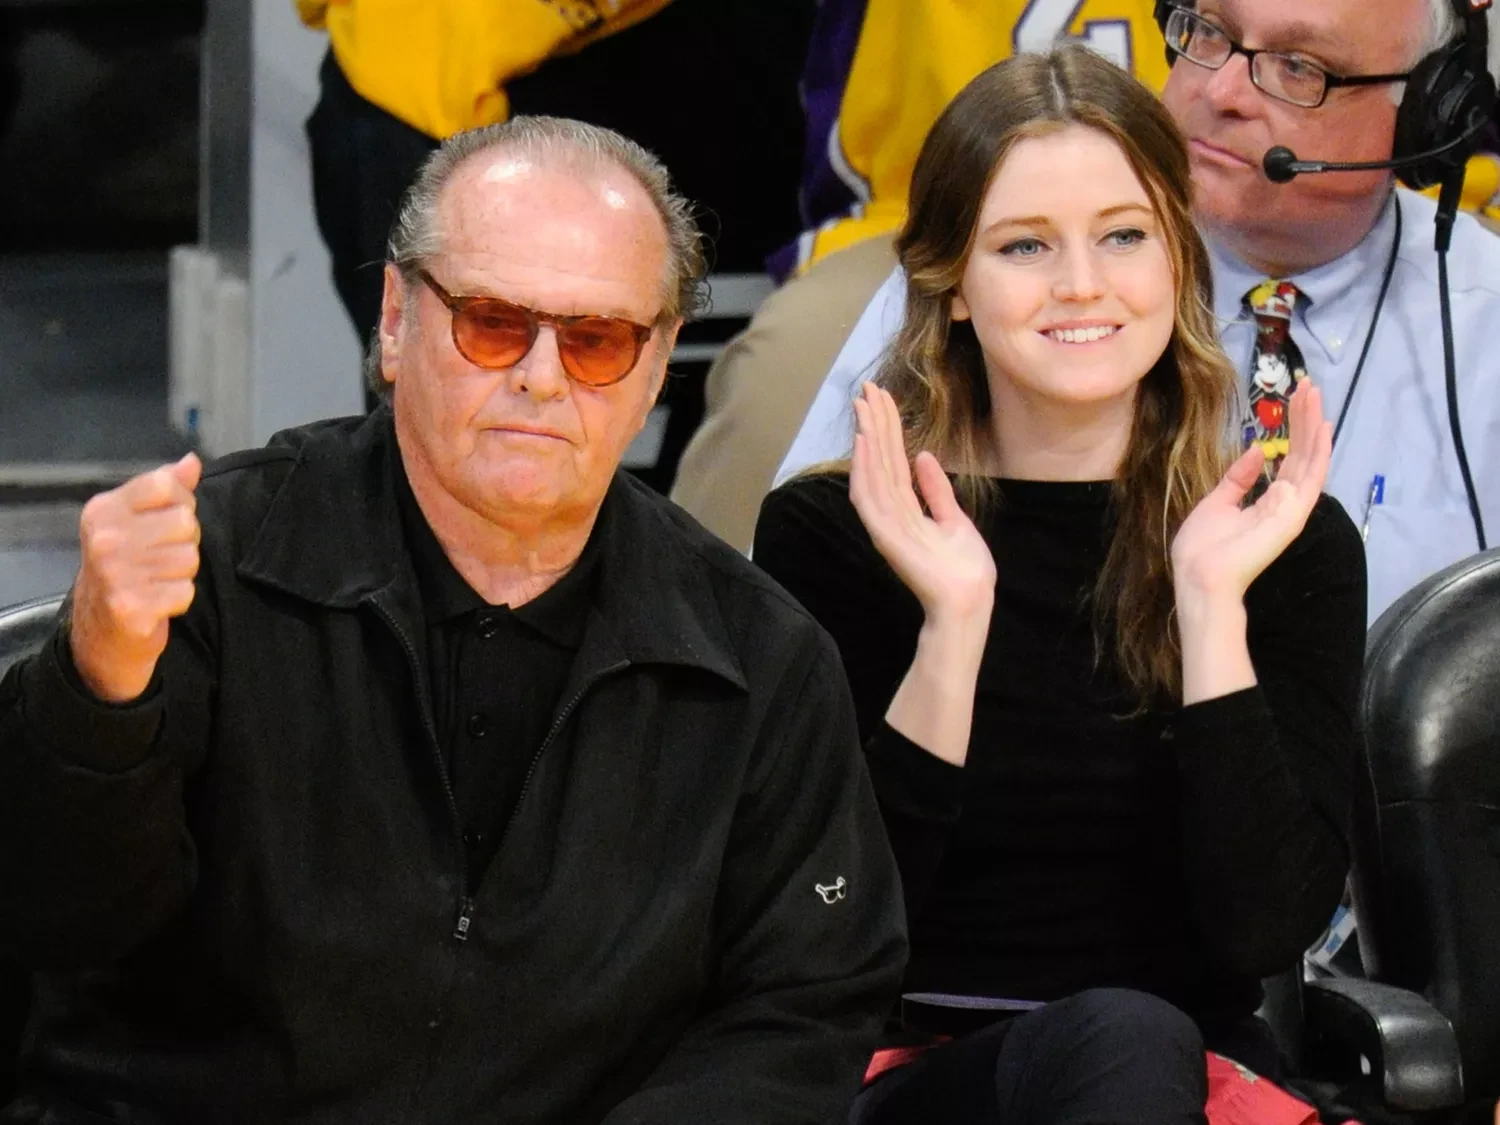 Jack Nicholson with his daughter Lorraine Nicholson